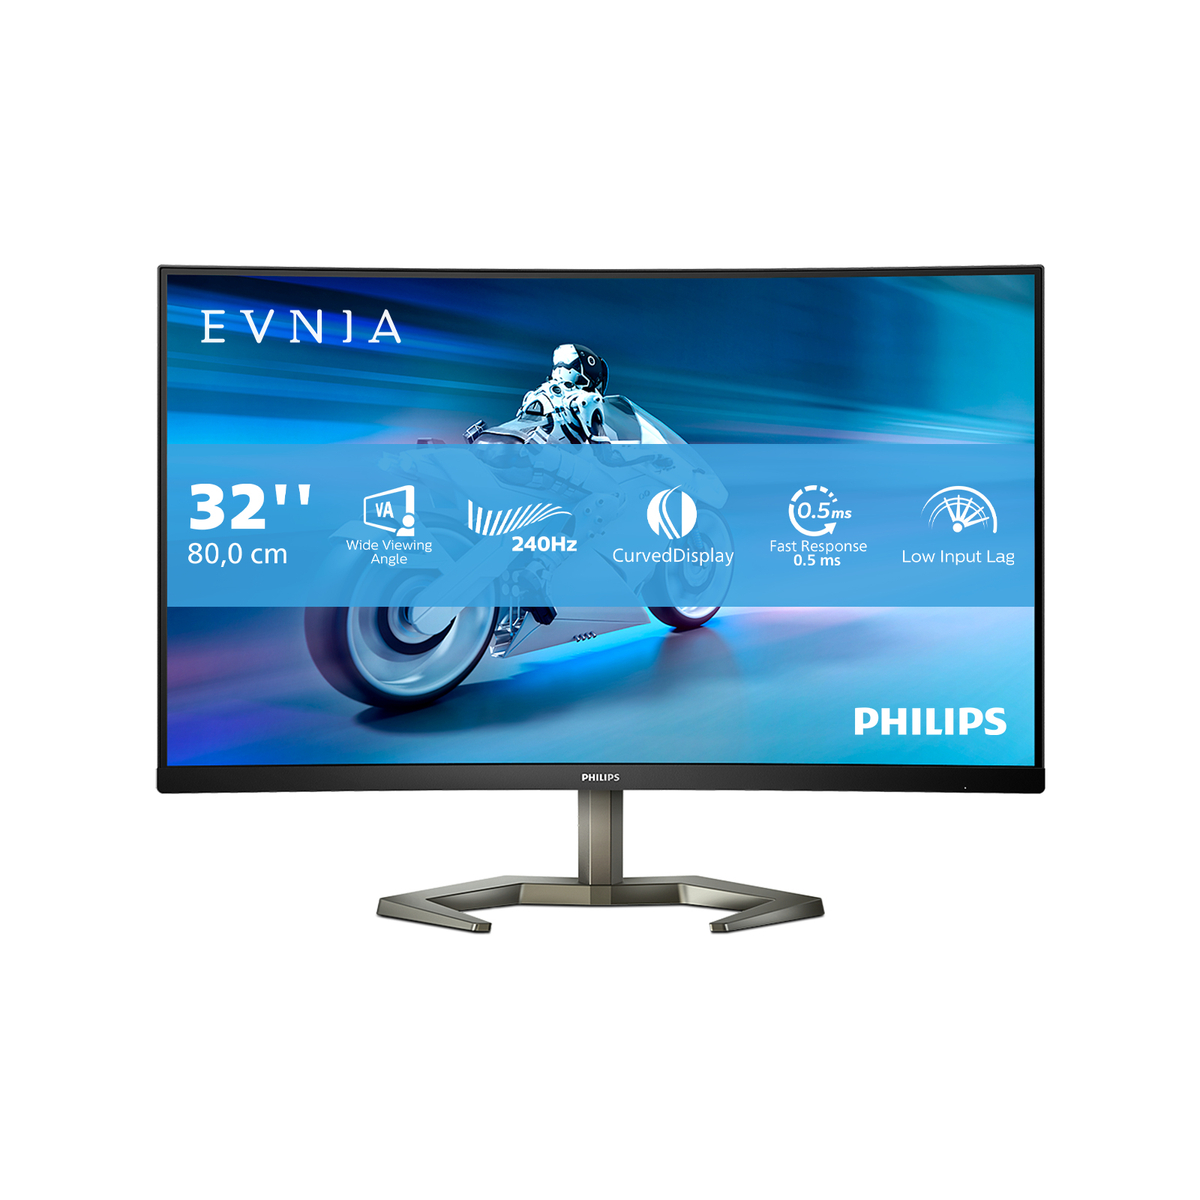 Evnia 32 FHD 240Hz Gaming monitor